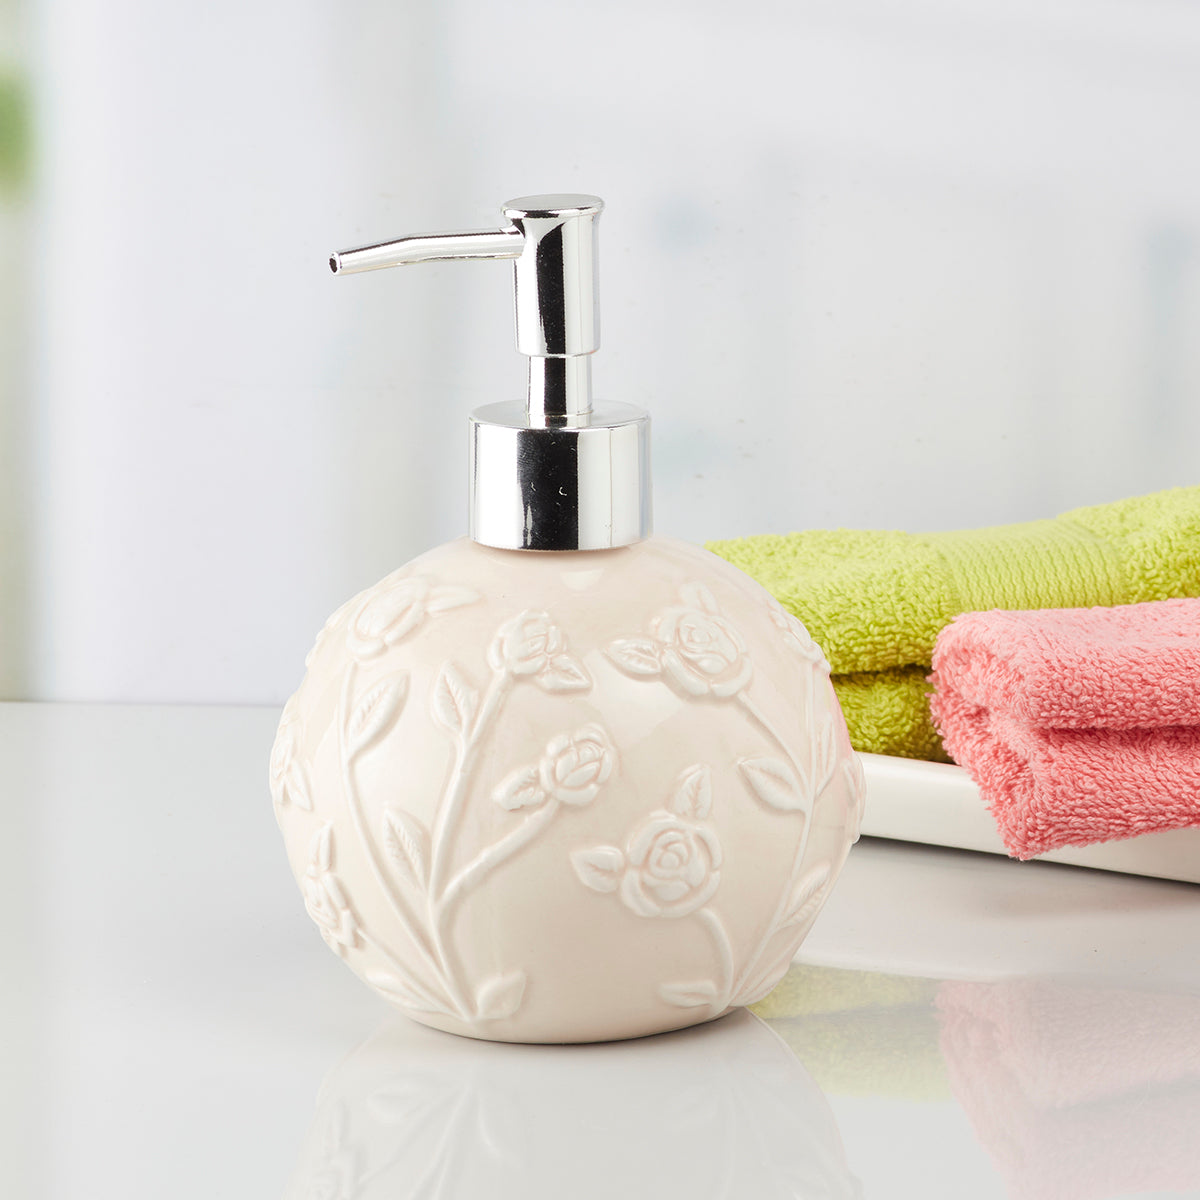 Ceramic Soap Dispenser Pump for Bathroom for Bath Gel, Lotion, Shampoo (8019)